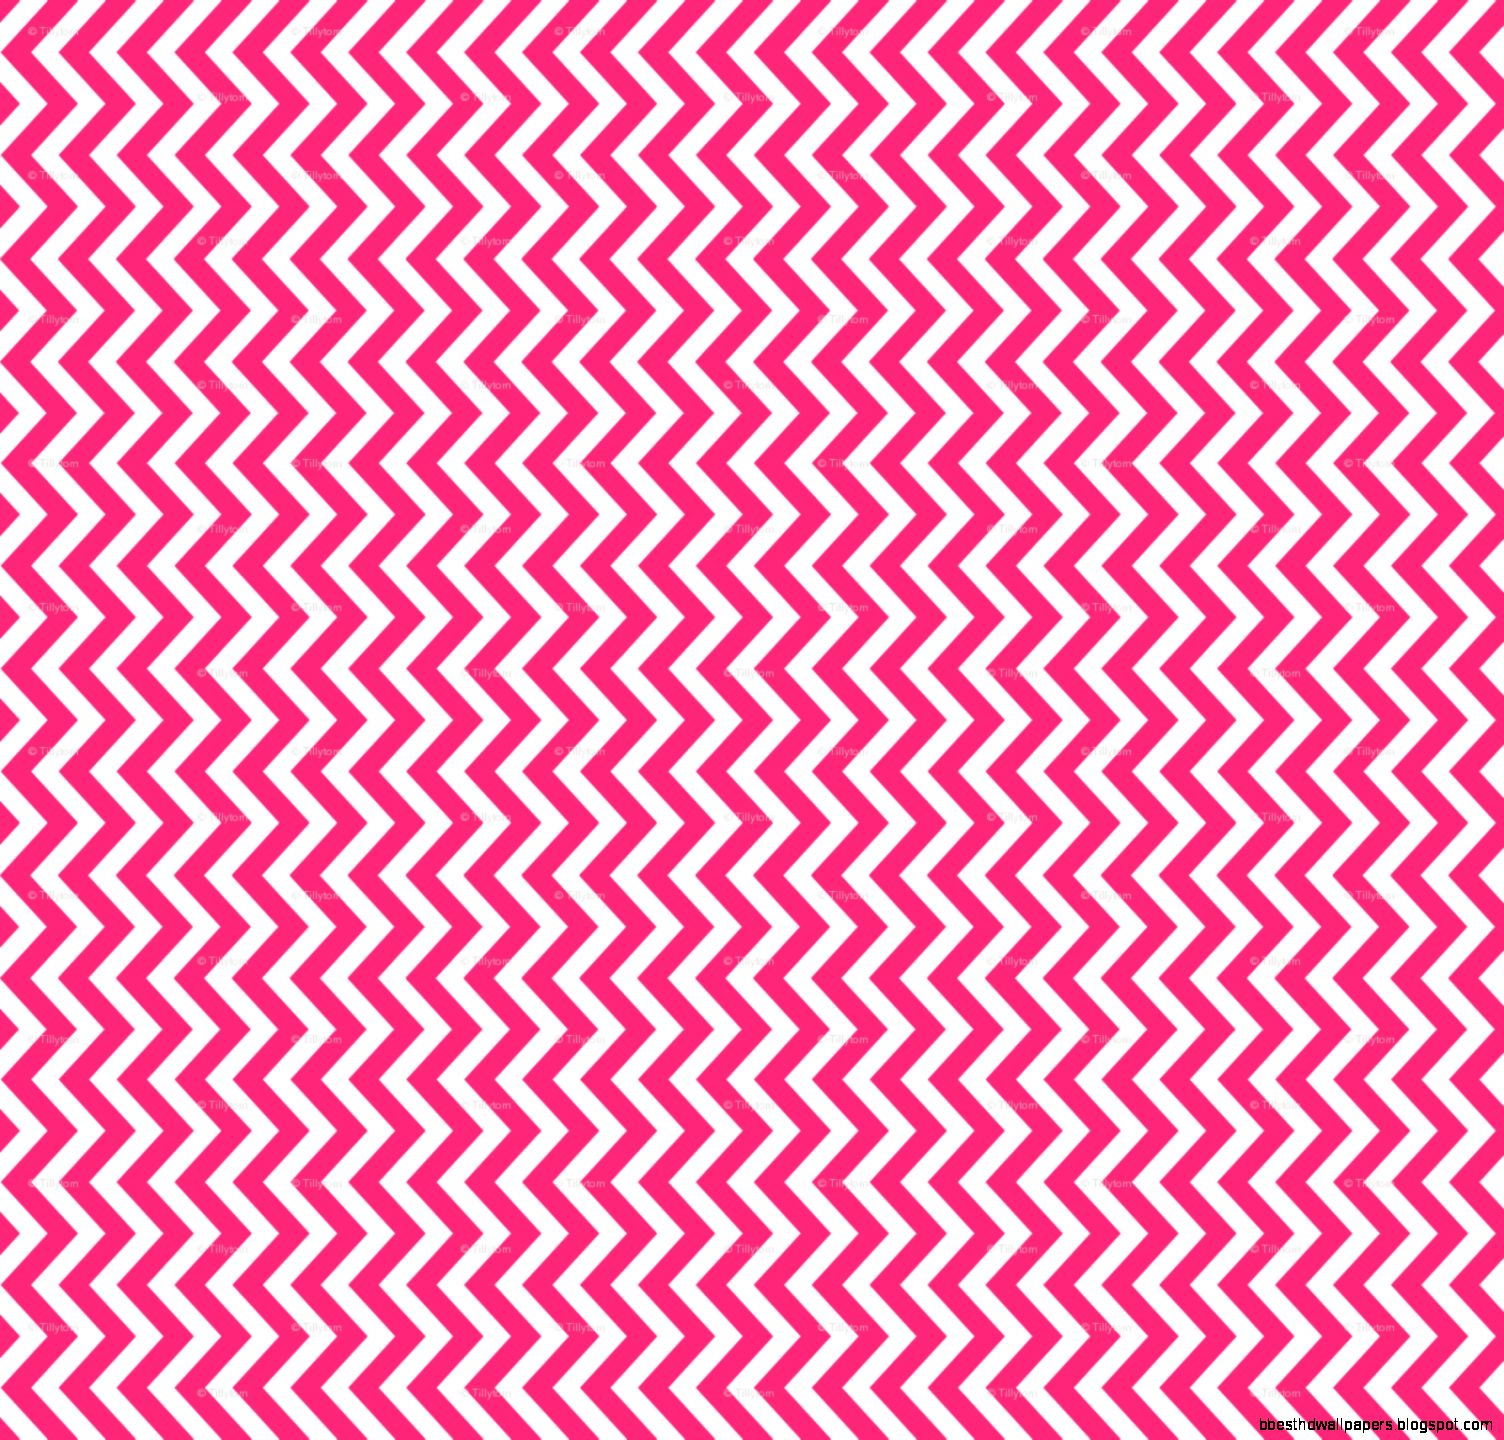 Pink Chevron Wallpaper | Best HD Wallpapers